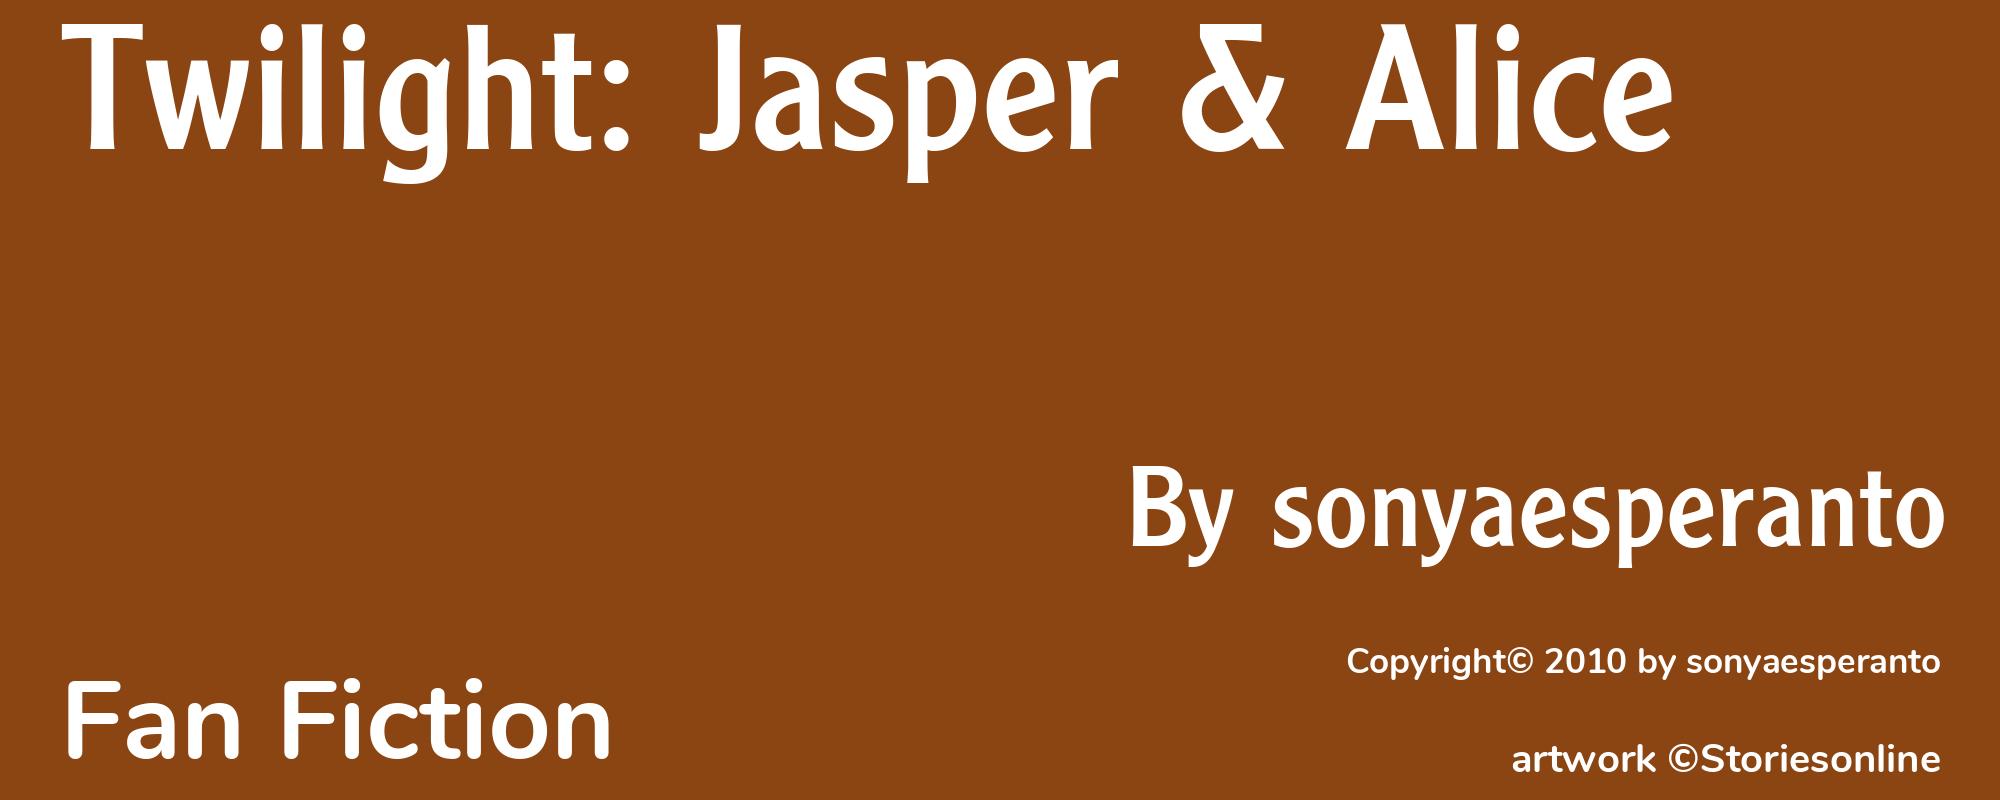 Twilight: Jasper & Alice - Cover